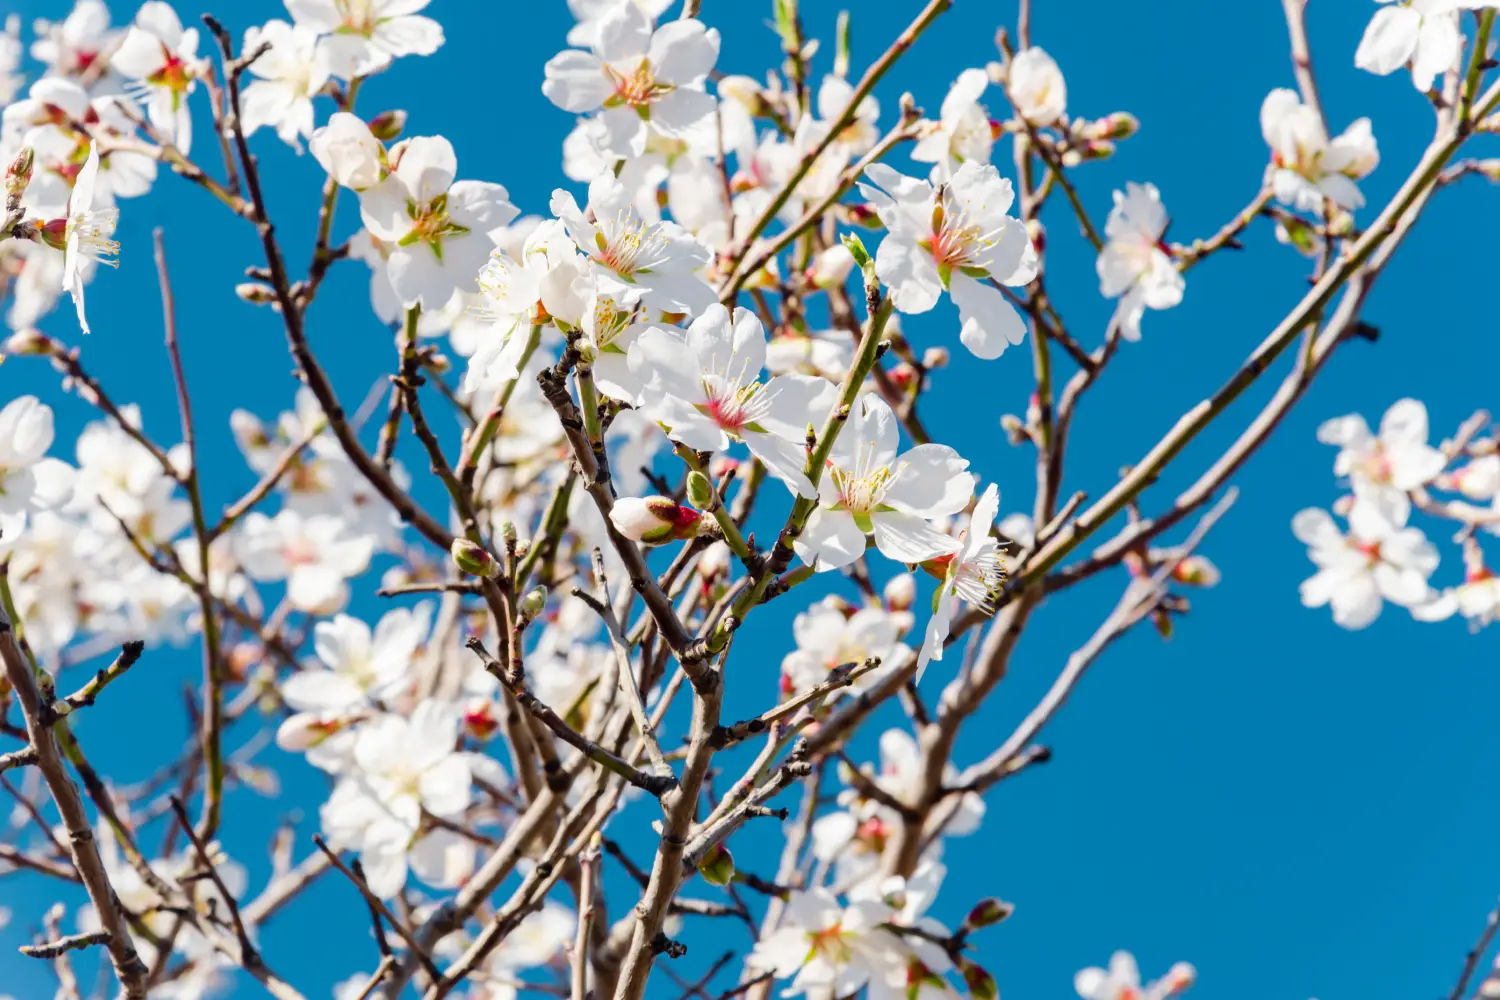 Ferry to Datca - Almond flowers, springtime Close-up of almond flowers from Datca, Mugla, Turkey.